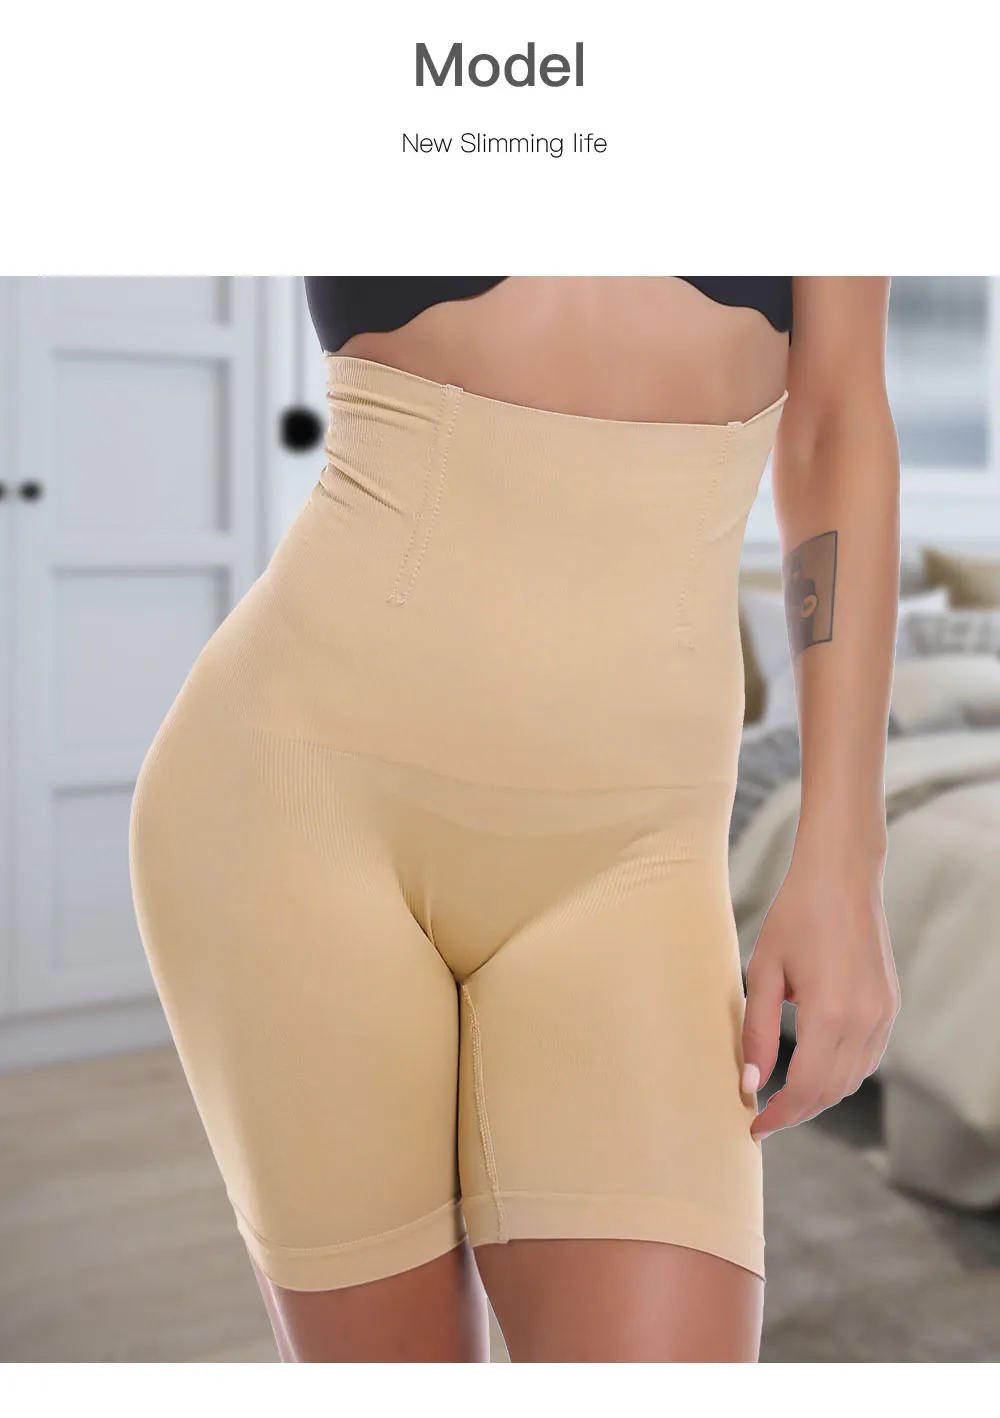 Seamless Waist Trainer Corset Women High Waist Slimming Push Up Panties  Shapewear Underwear Body Shaper (Color : Black, Size : M-L)